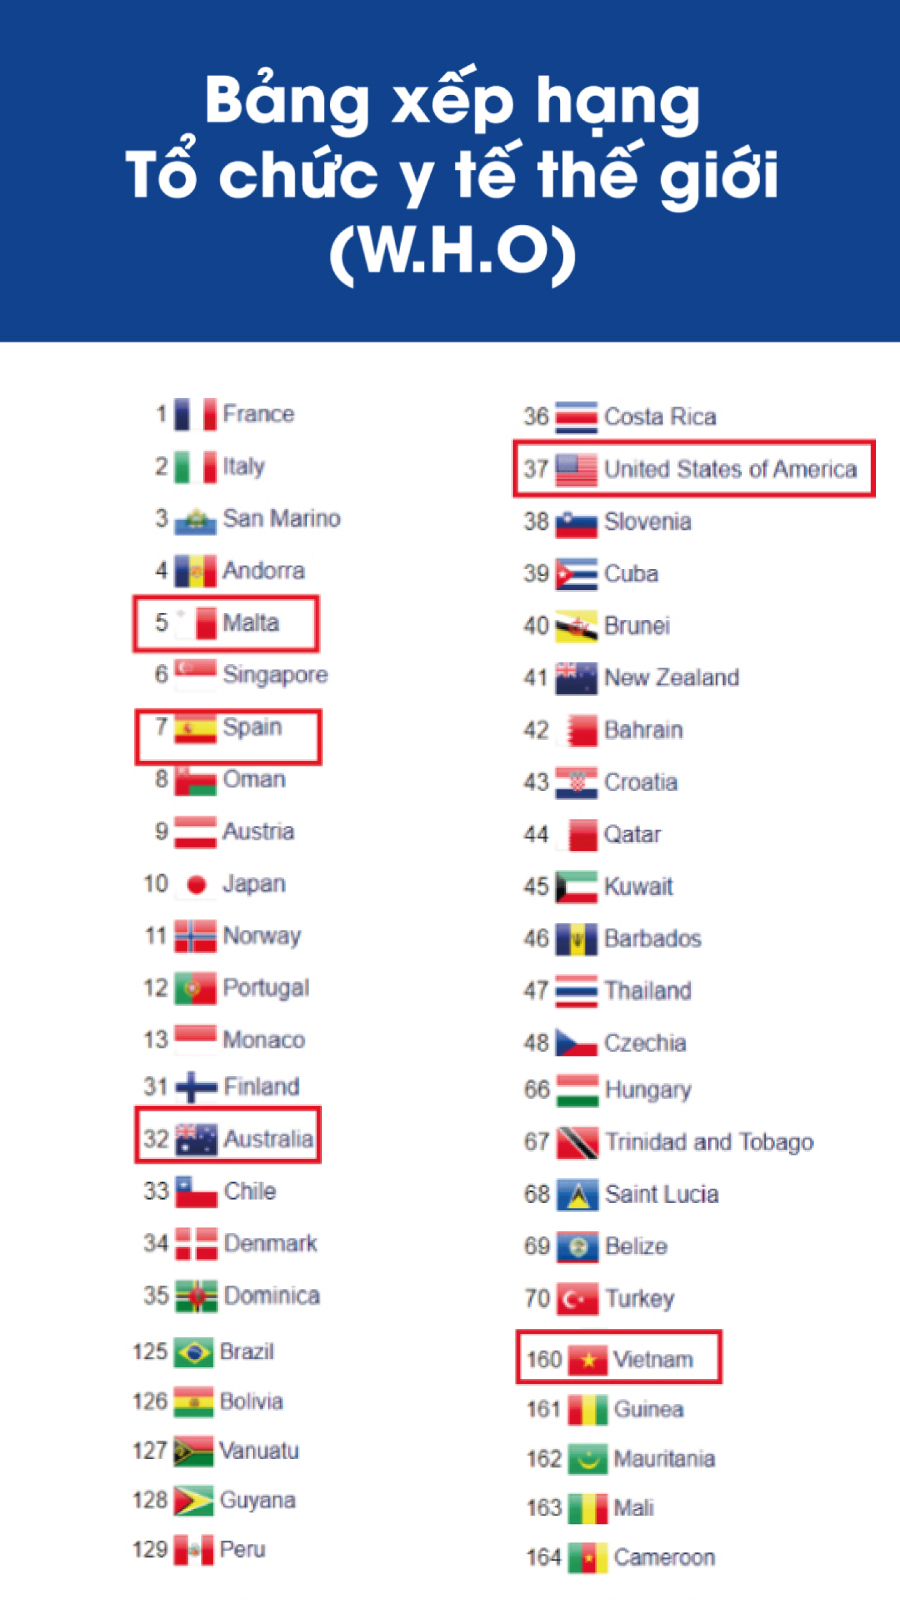 Hệ thống y tế Malta xếp hạng #5 thế giới (theo W.H.O)